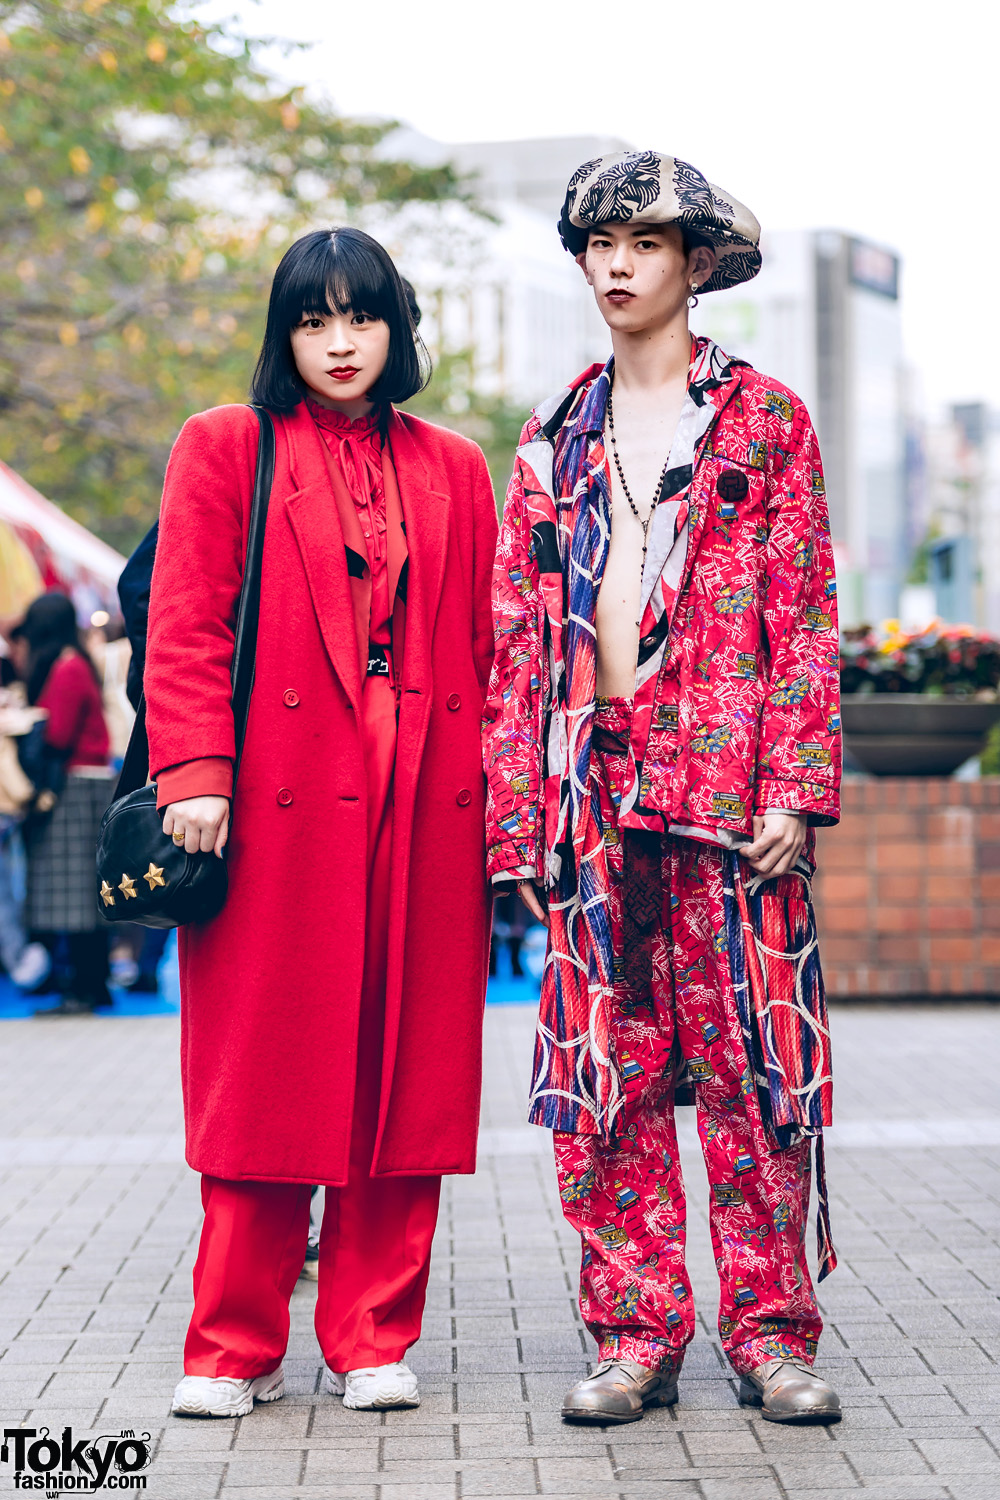 All Red & Mixed Prints Tokyo Street Styles w/ Christopher Nemeth Rope Print, Mihara Yasuhiro & Vintage Fashion